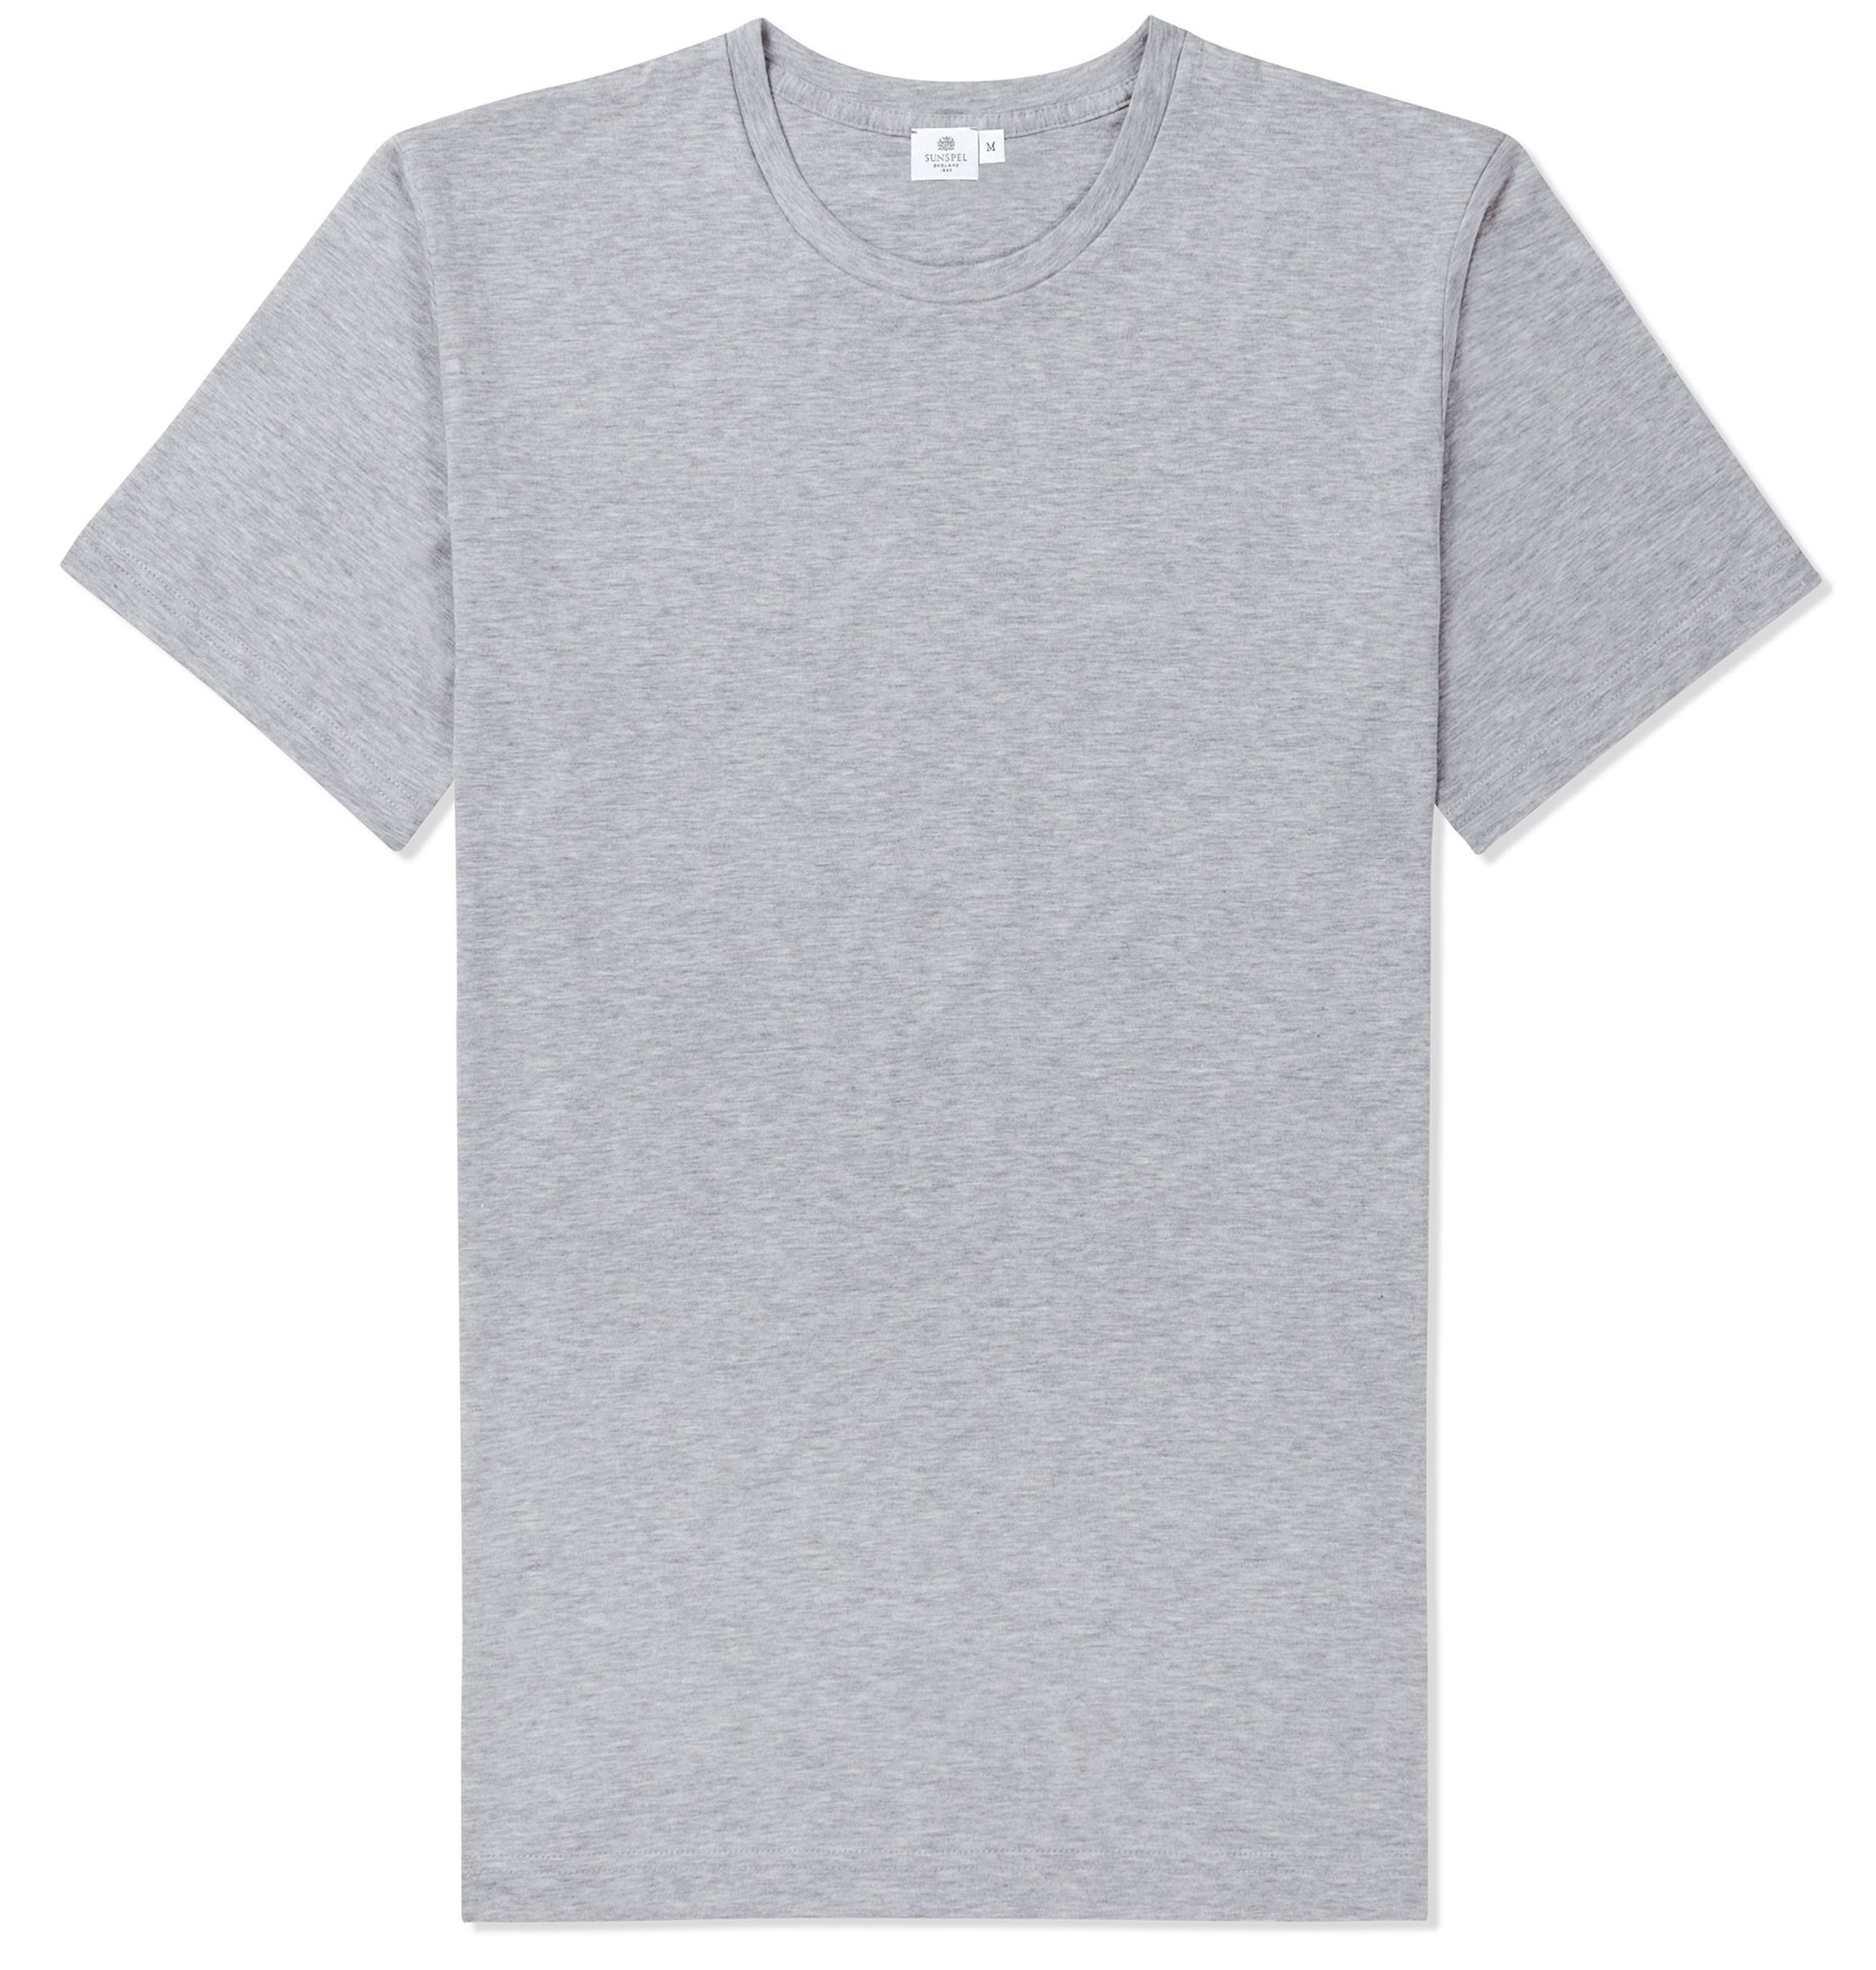 Lyst - Sunspel Riviera Crew Neck T-Shirt in Gray for Men